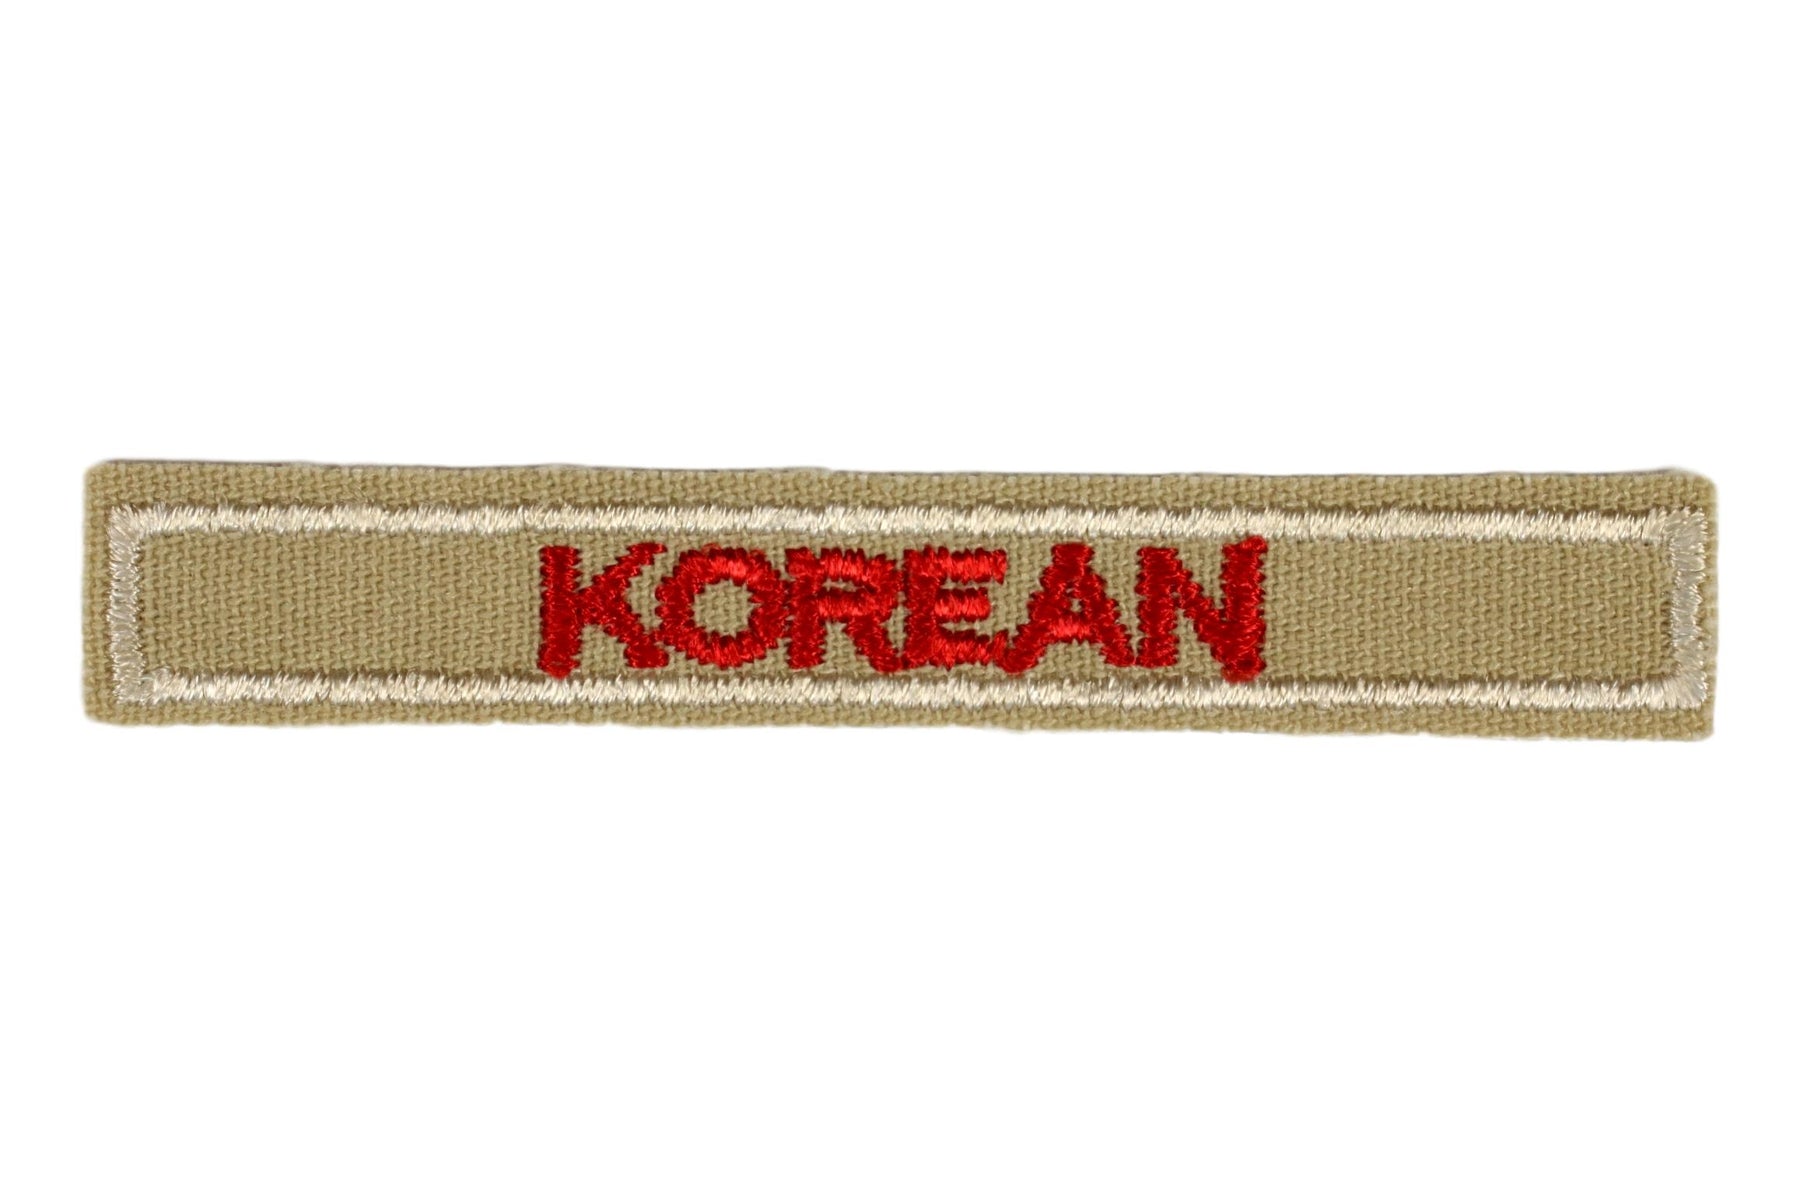 Korean Interpreter Strip Tan